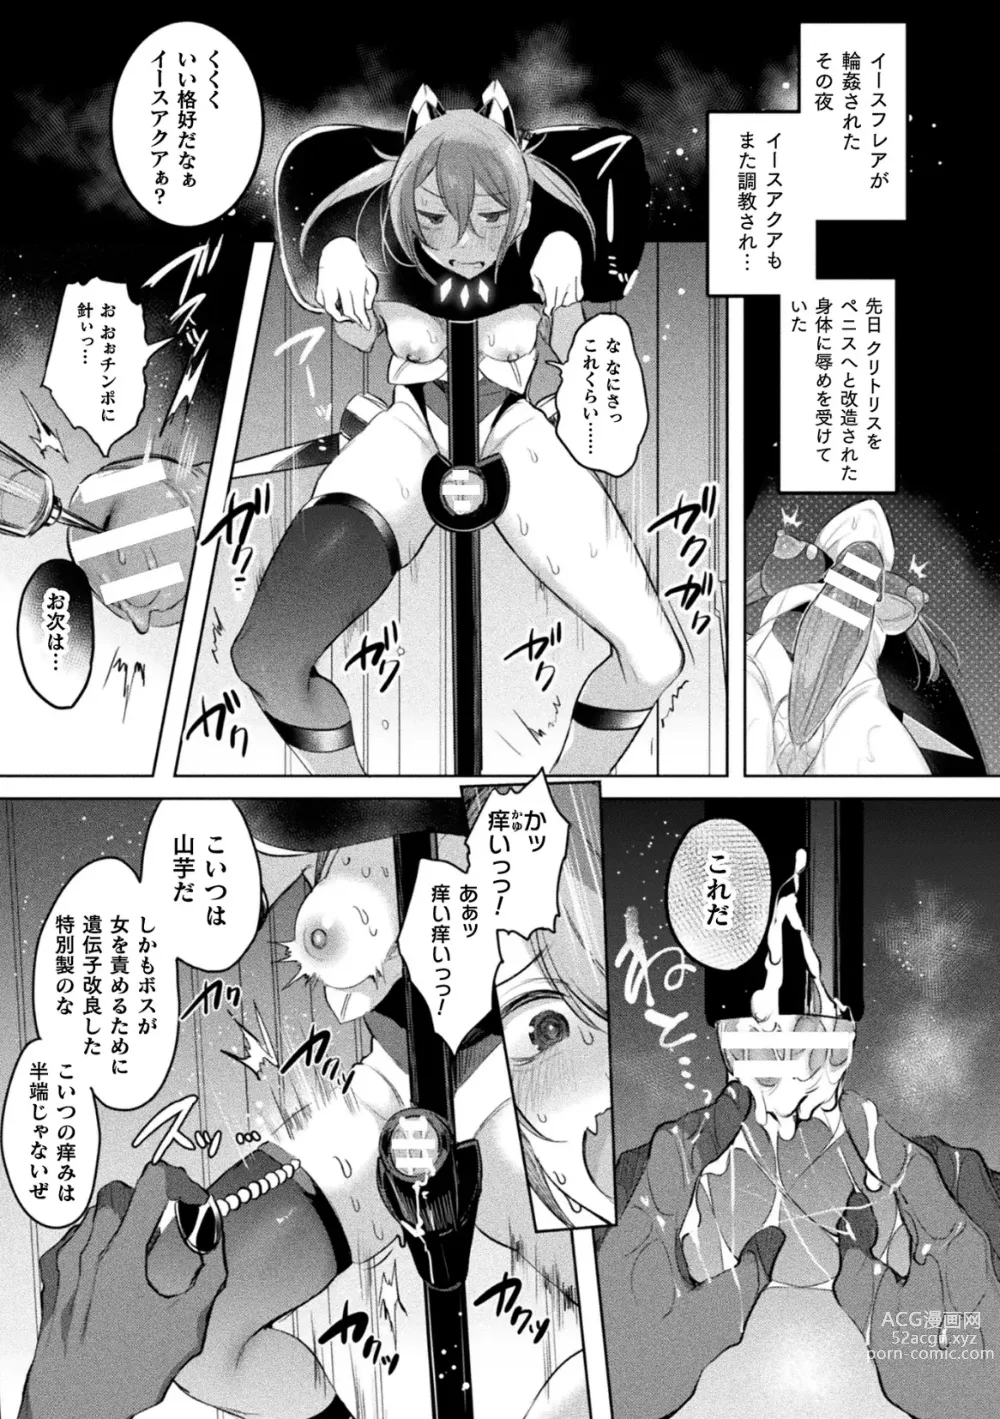 Page 11 of manga Kukkoro Heroines Vol. 35